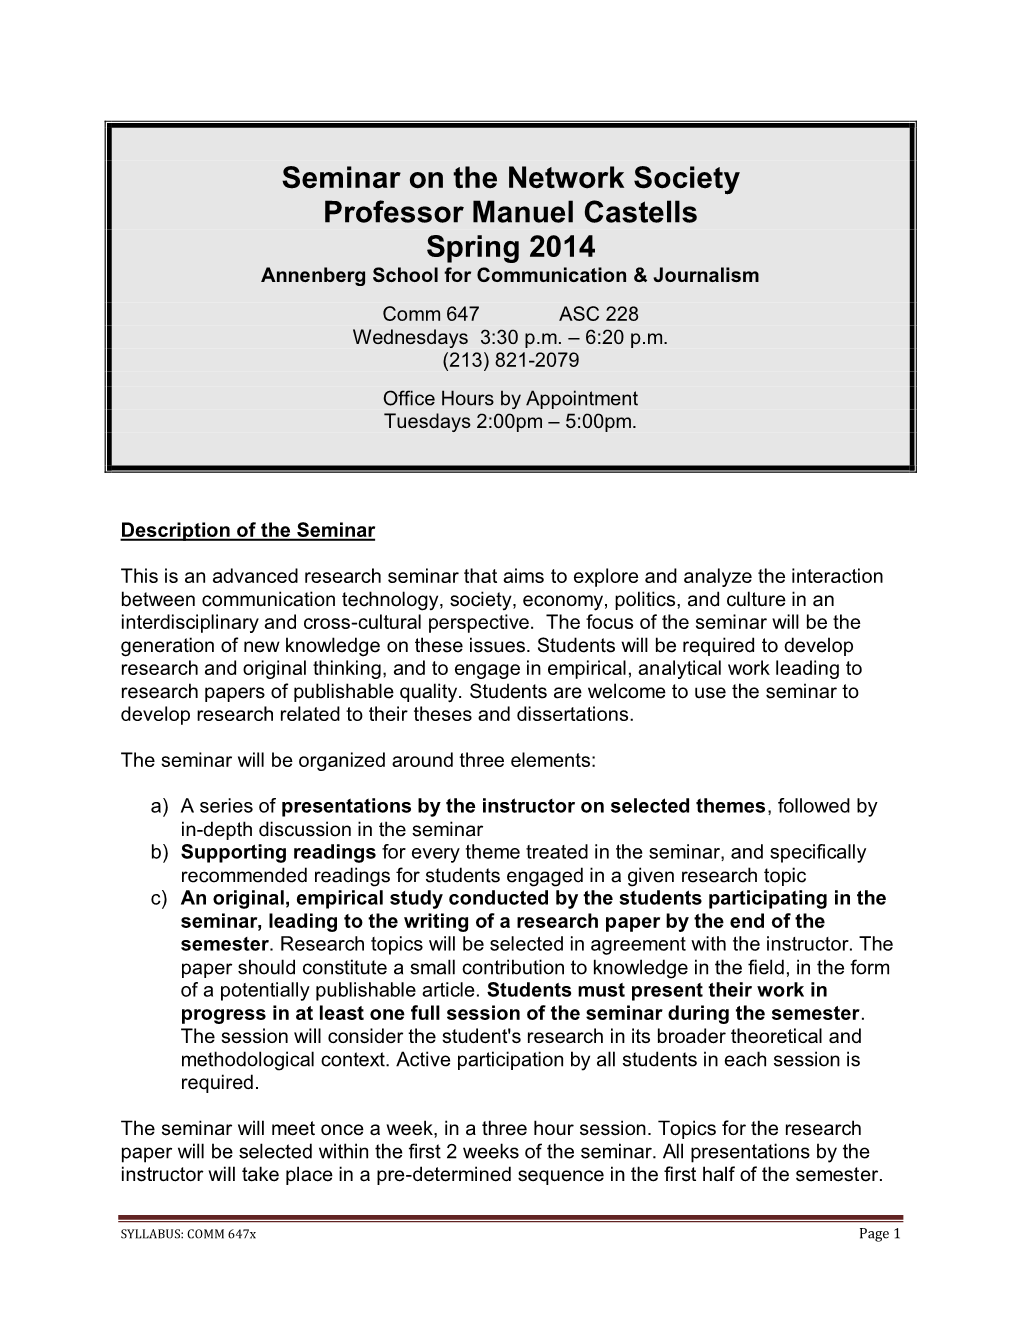 USC Seminar Network Society